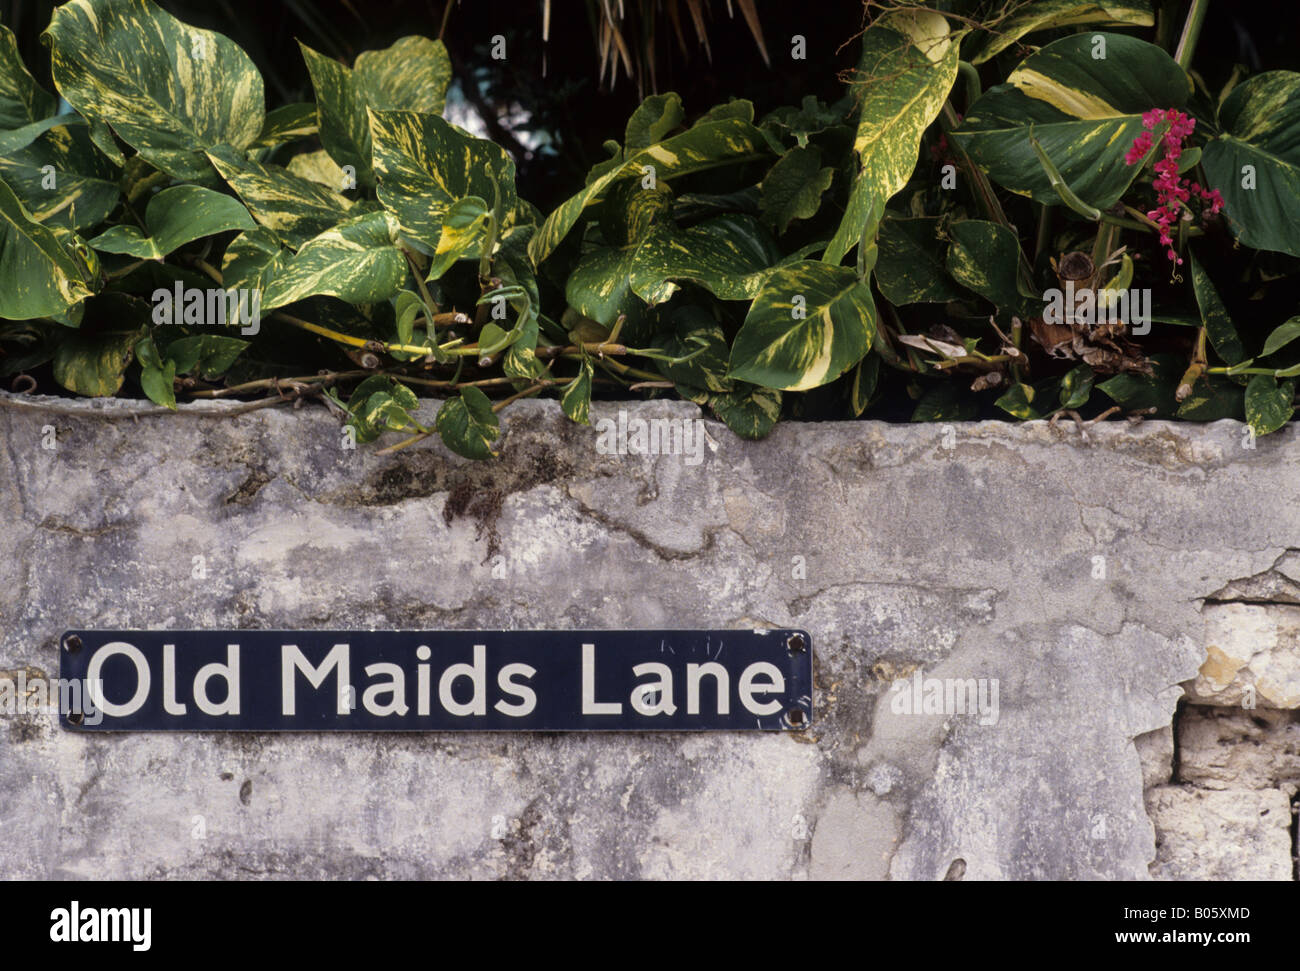 Old Maids Lane street sign, St George's, Bermuda Stock Photo